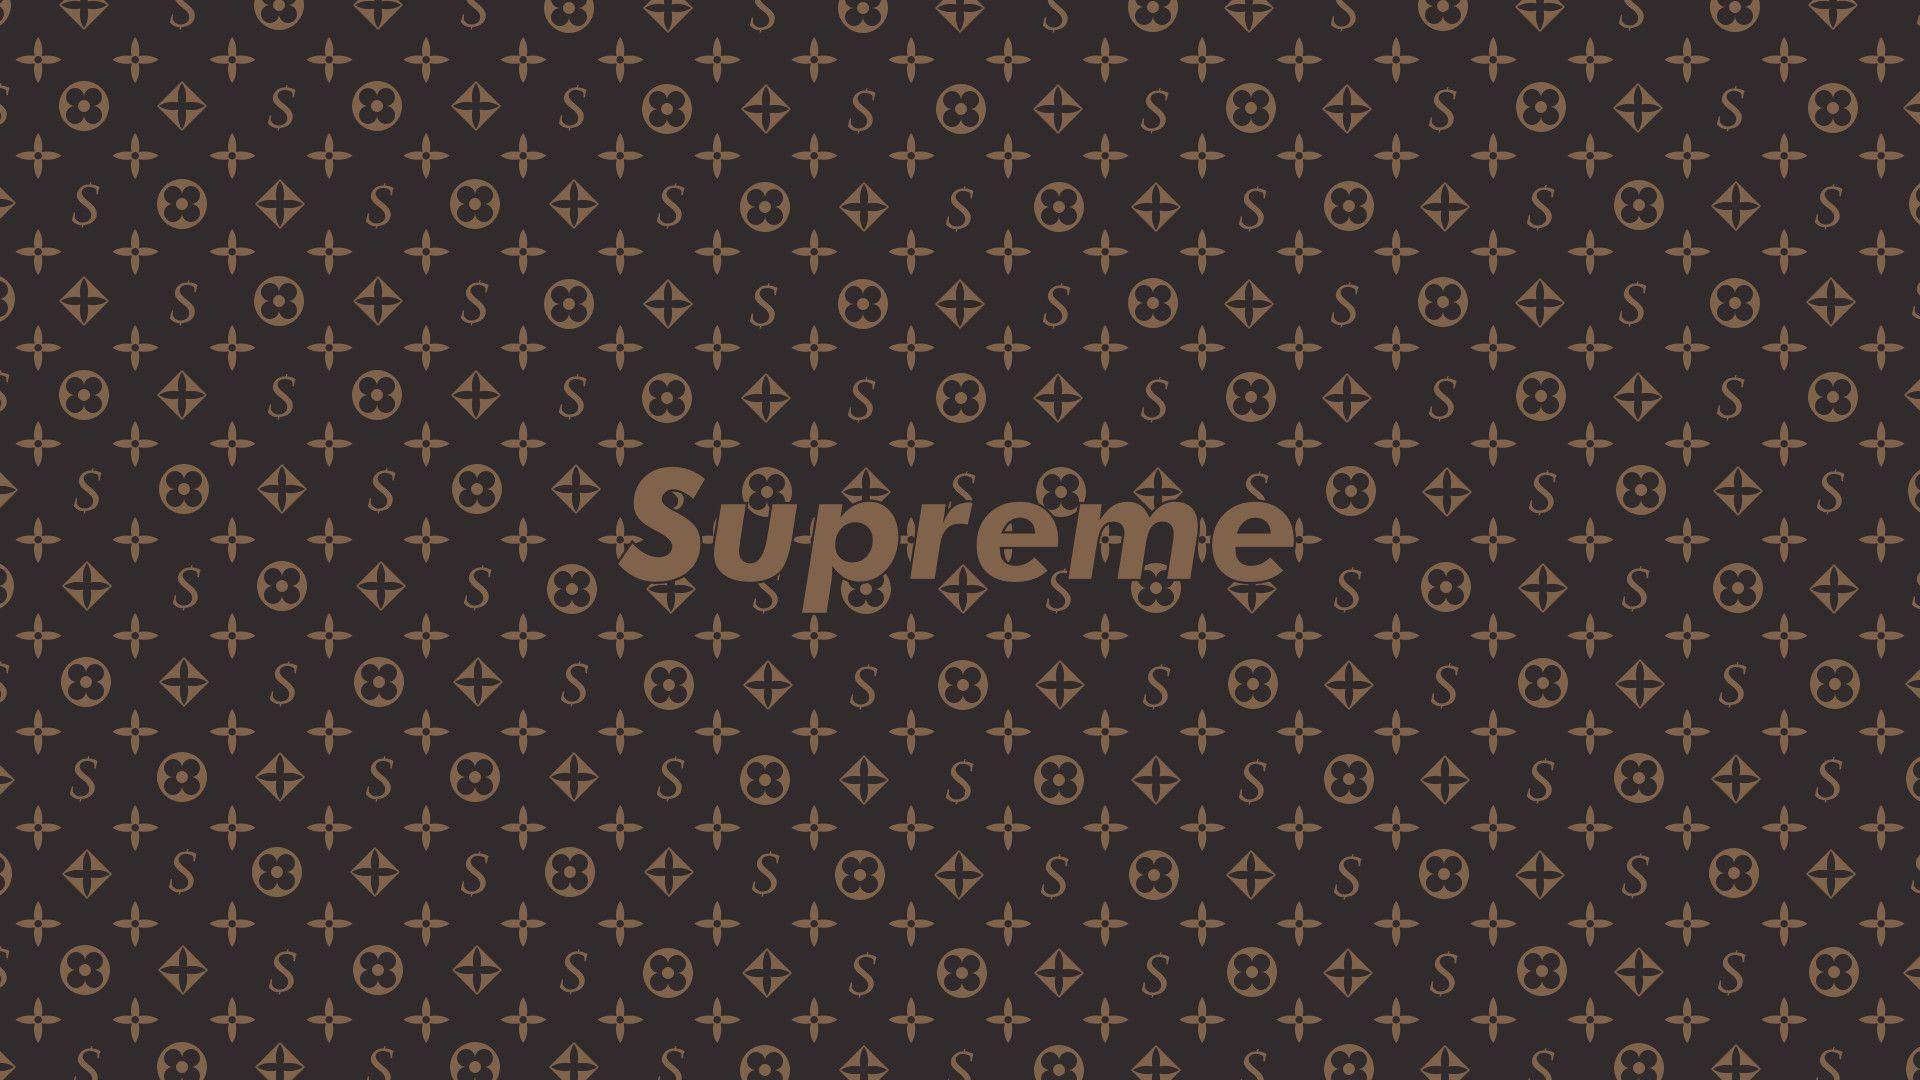 Supreme Gucci Dragon's wallpaper by AlexandruBoaba - Download on